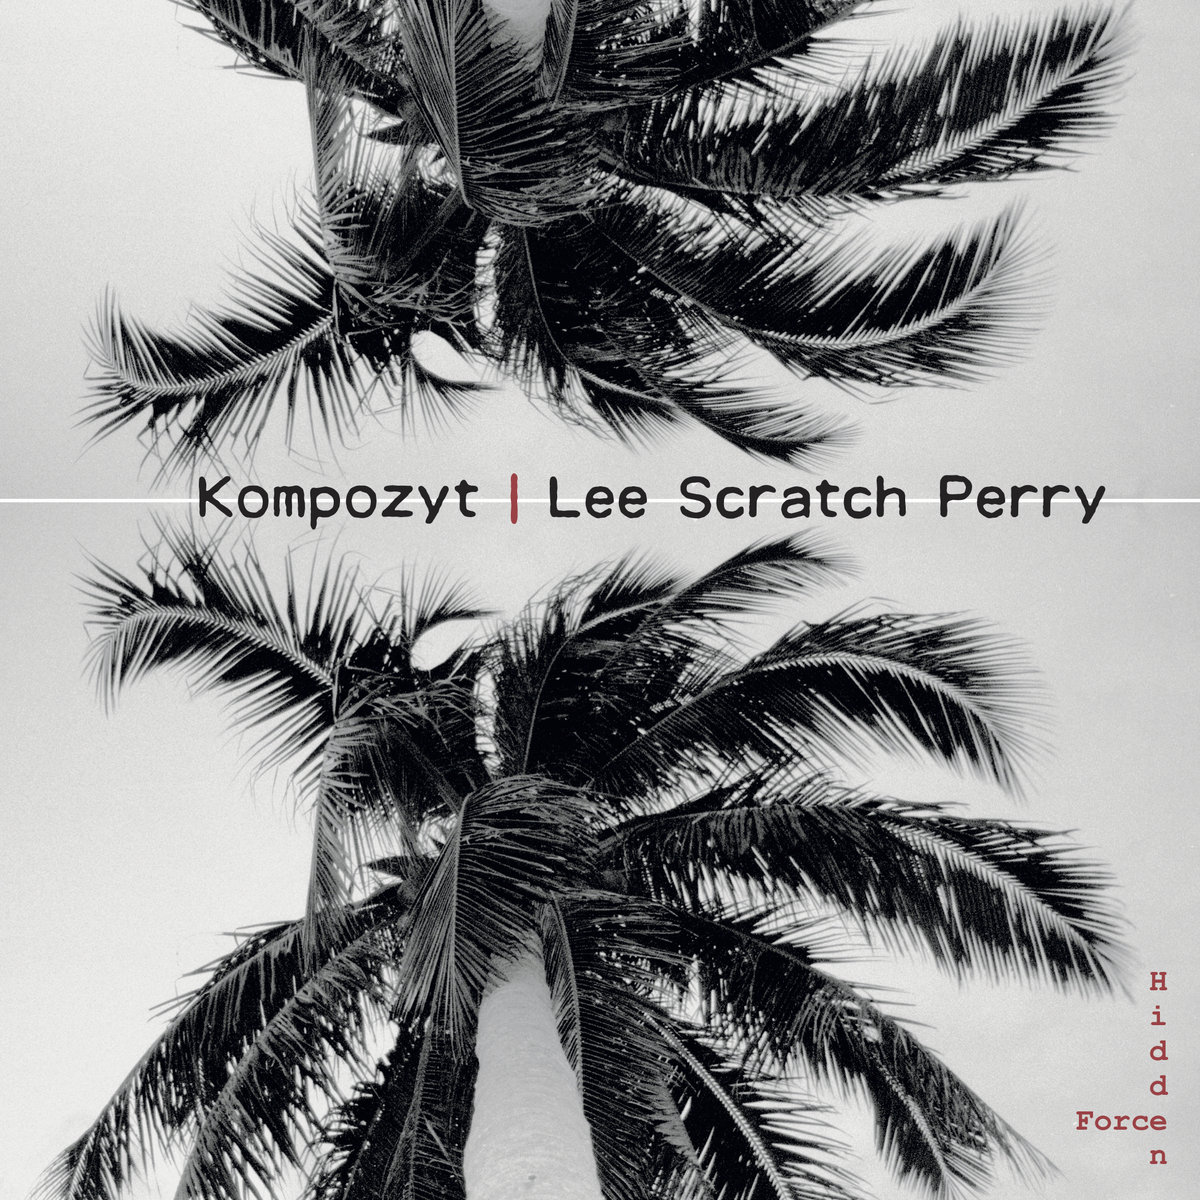 Kompozyt & Lee Scratch Perry - Hidden Force / Kompozyt - Homesick (7")